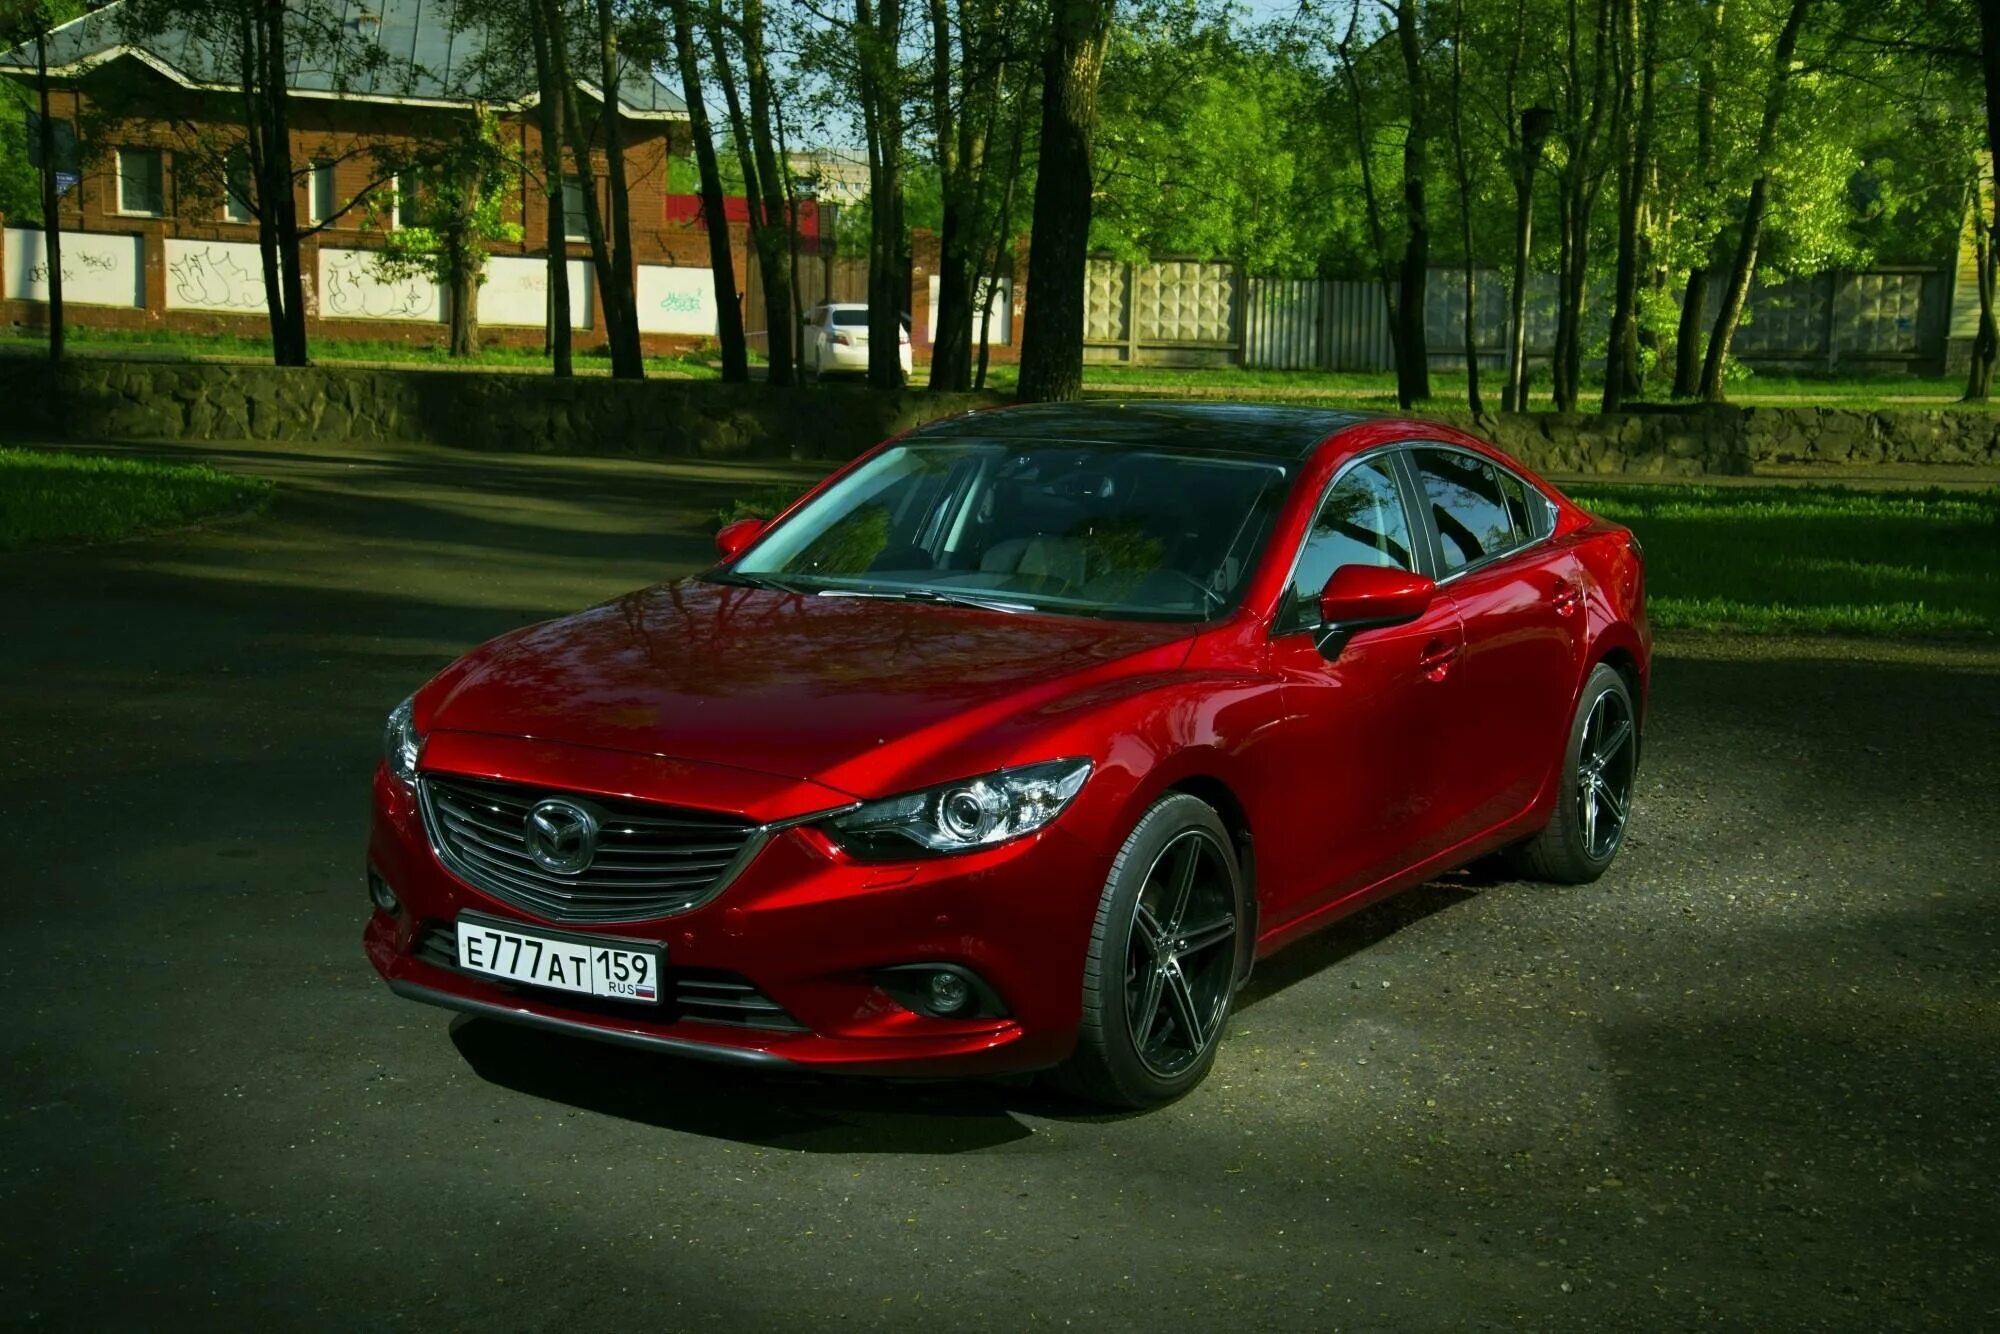 Mazda 6 Red. Мазда 6 2015 года красная. Мазда 6 красная новый кузов. Мазда 6 красная седан. Мазда красная купить